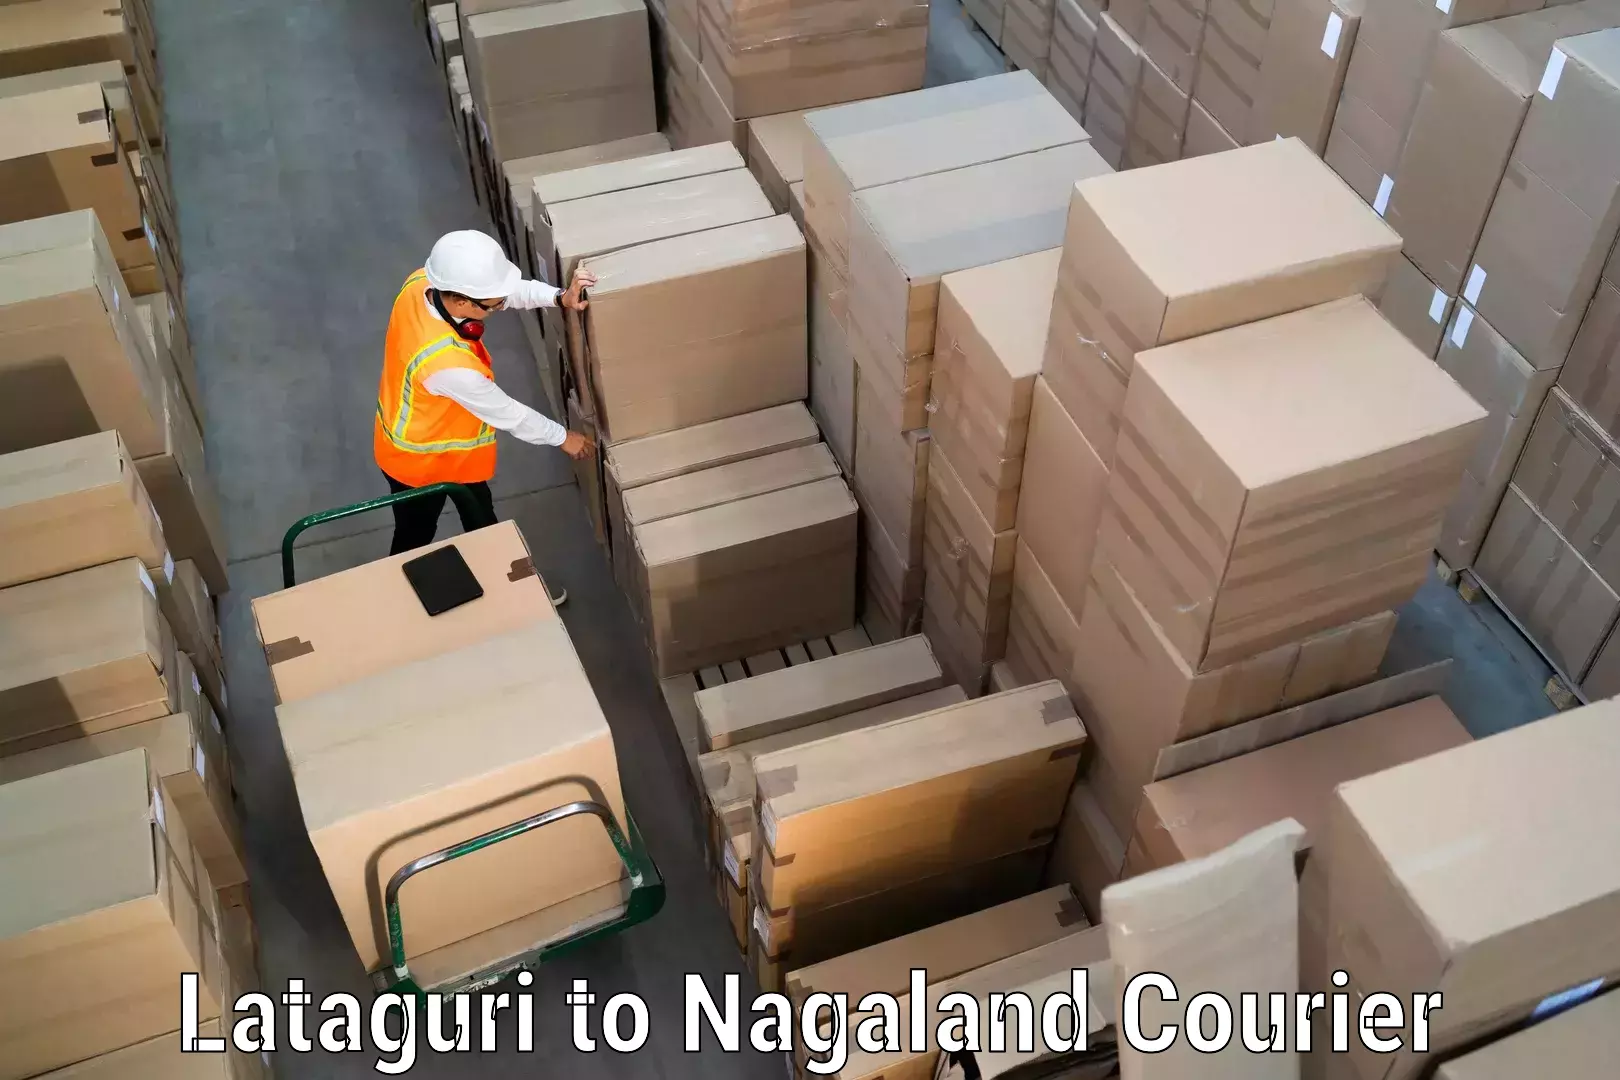 24-hour delivery options Lataguri to Nagaland